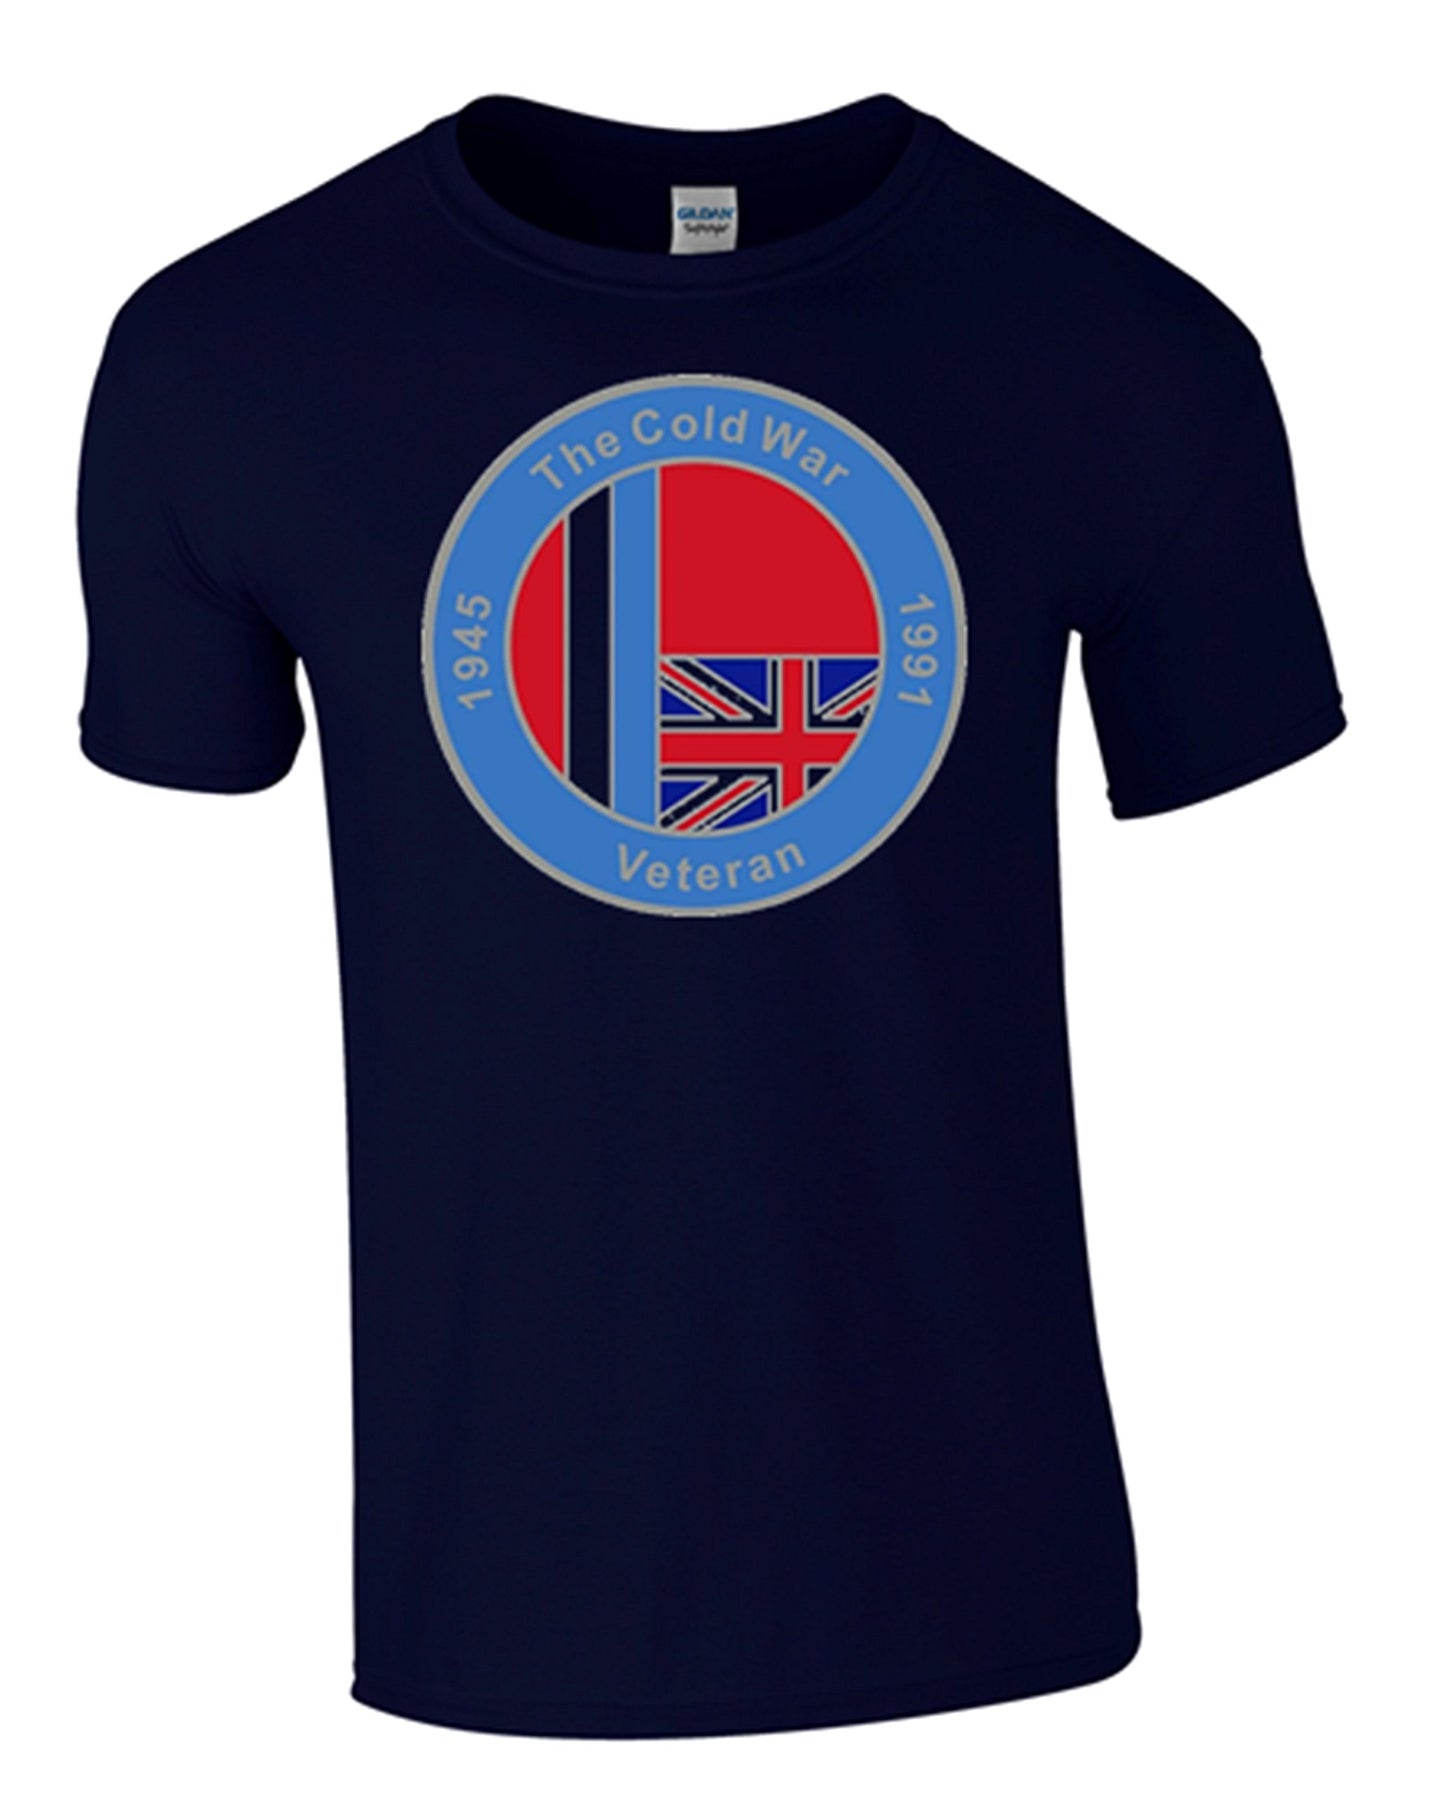 Bear Essentials Clothing. Cold War Op Banner T/Shirt (XXL, Blue) - Army 1157 kit Army 1157 Kit